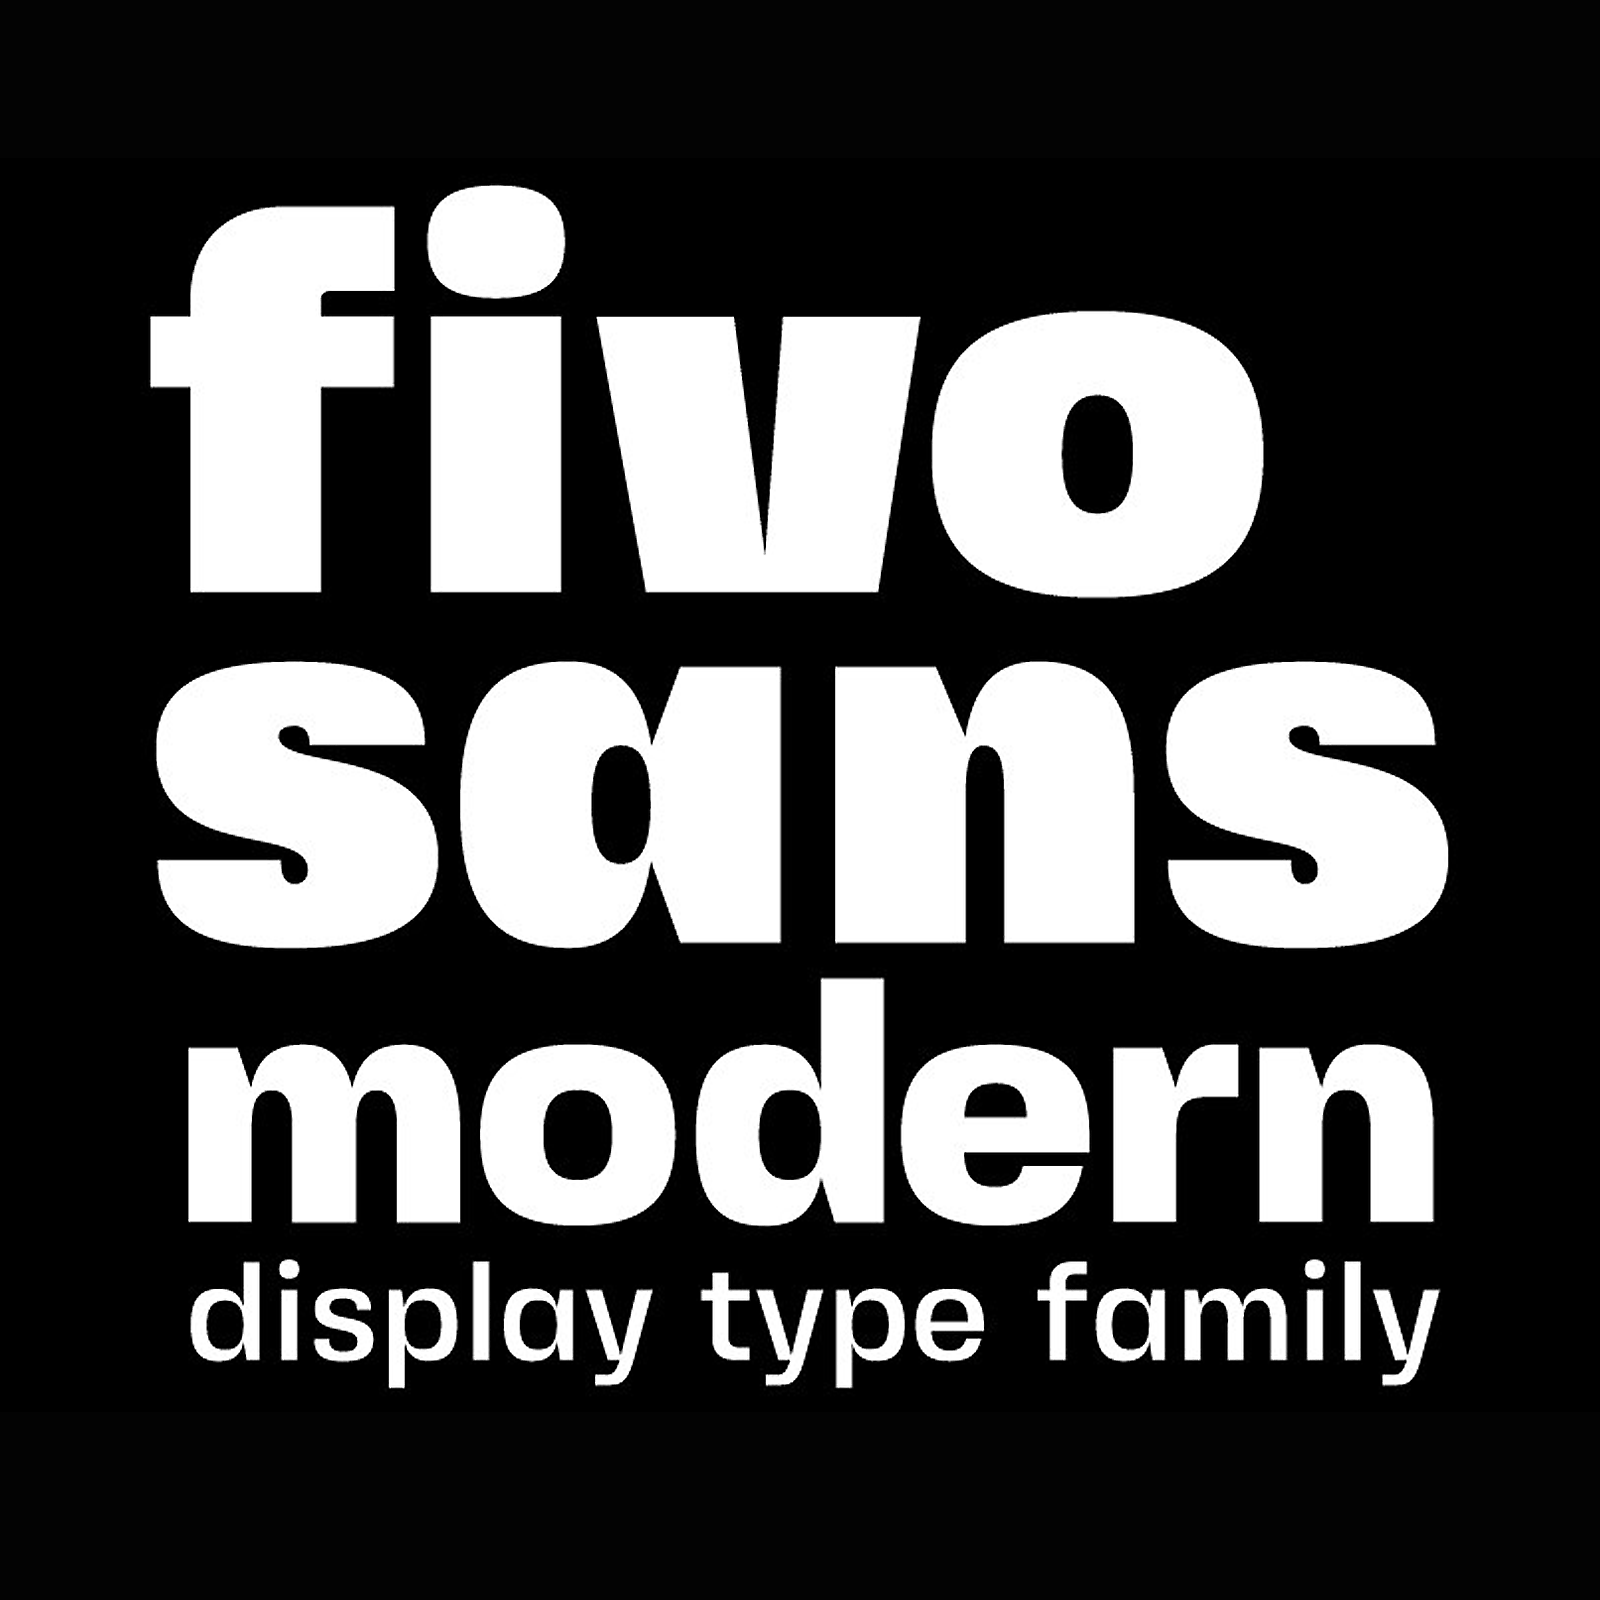 Шрифт Fivo Sans Modern